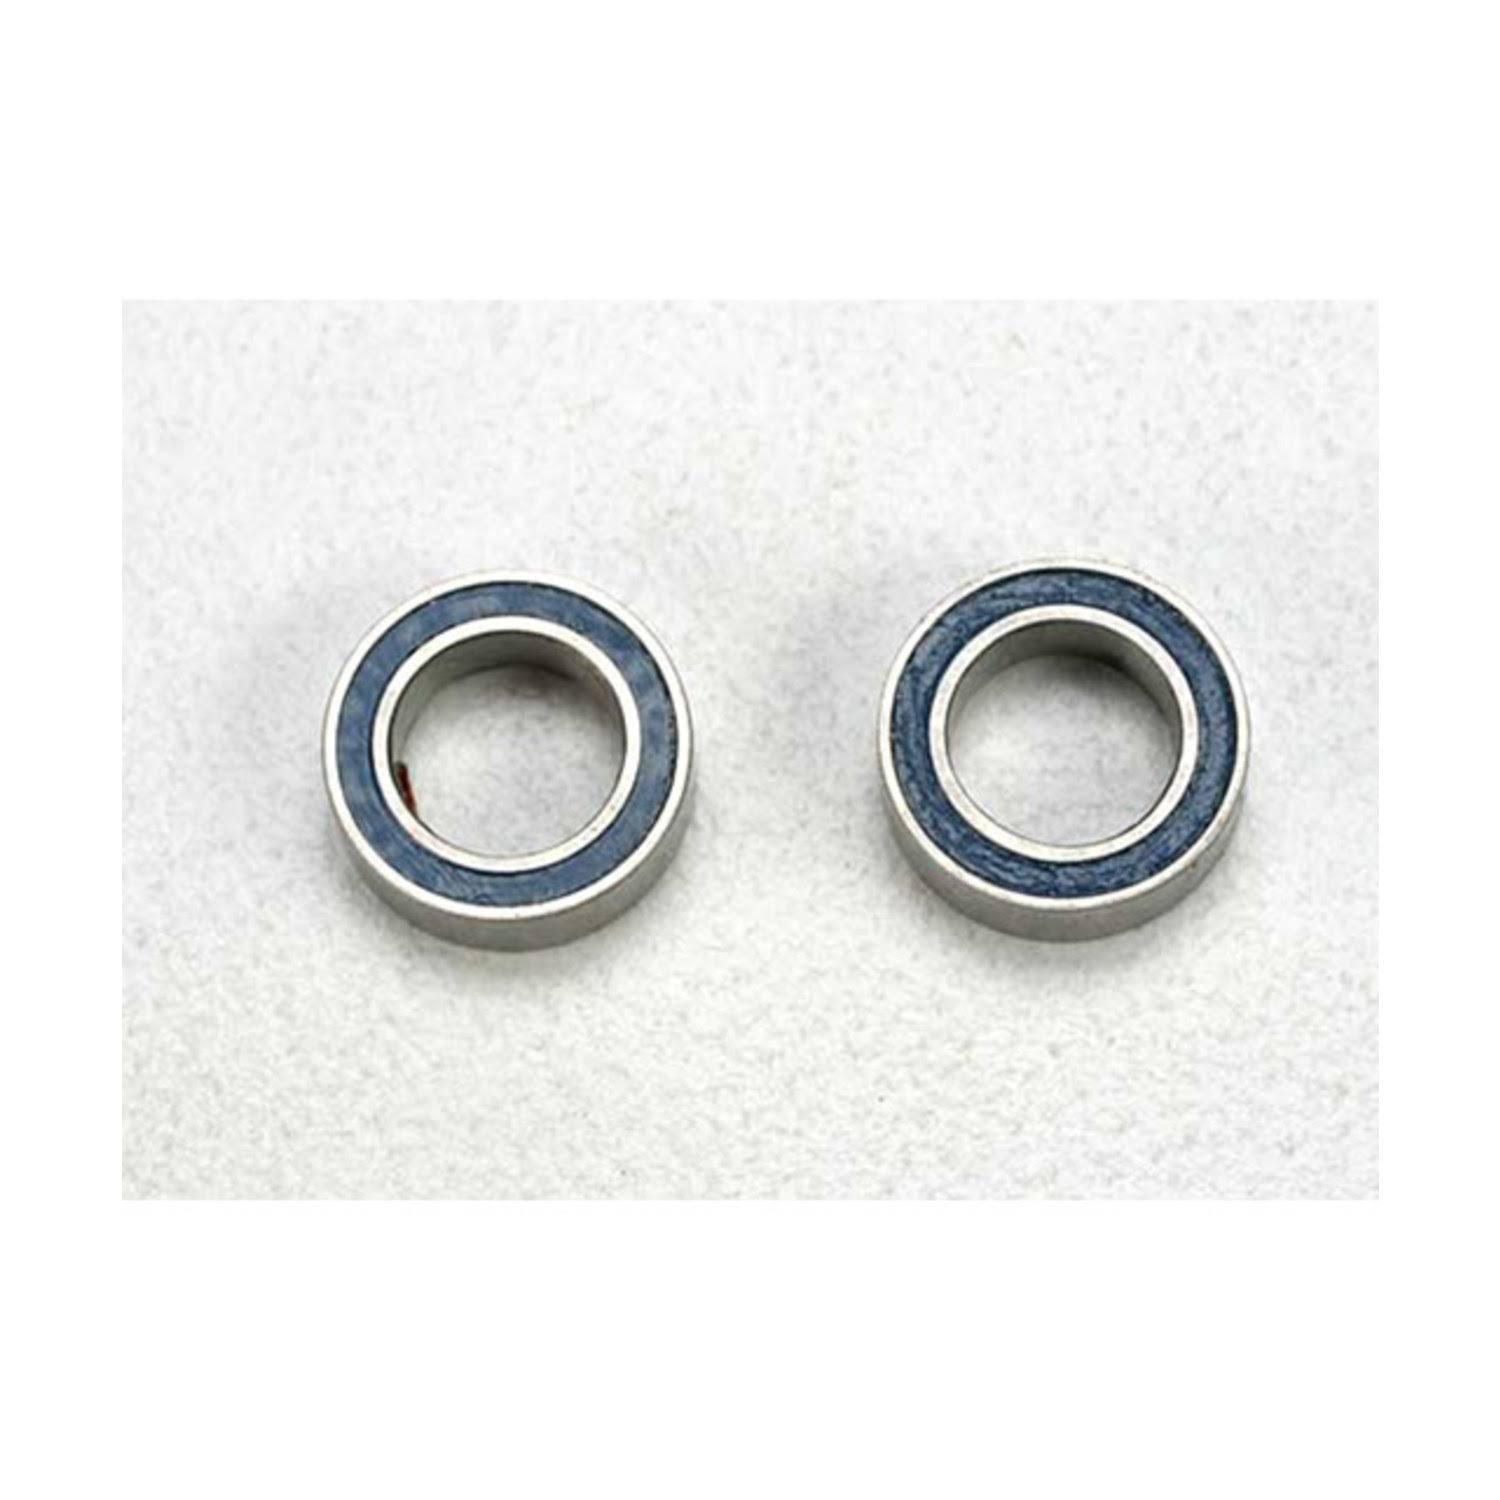 Traxxas 5114 Ball-bearings (2) 5 x 8 x 2.5mm